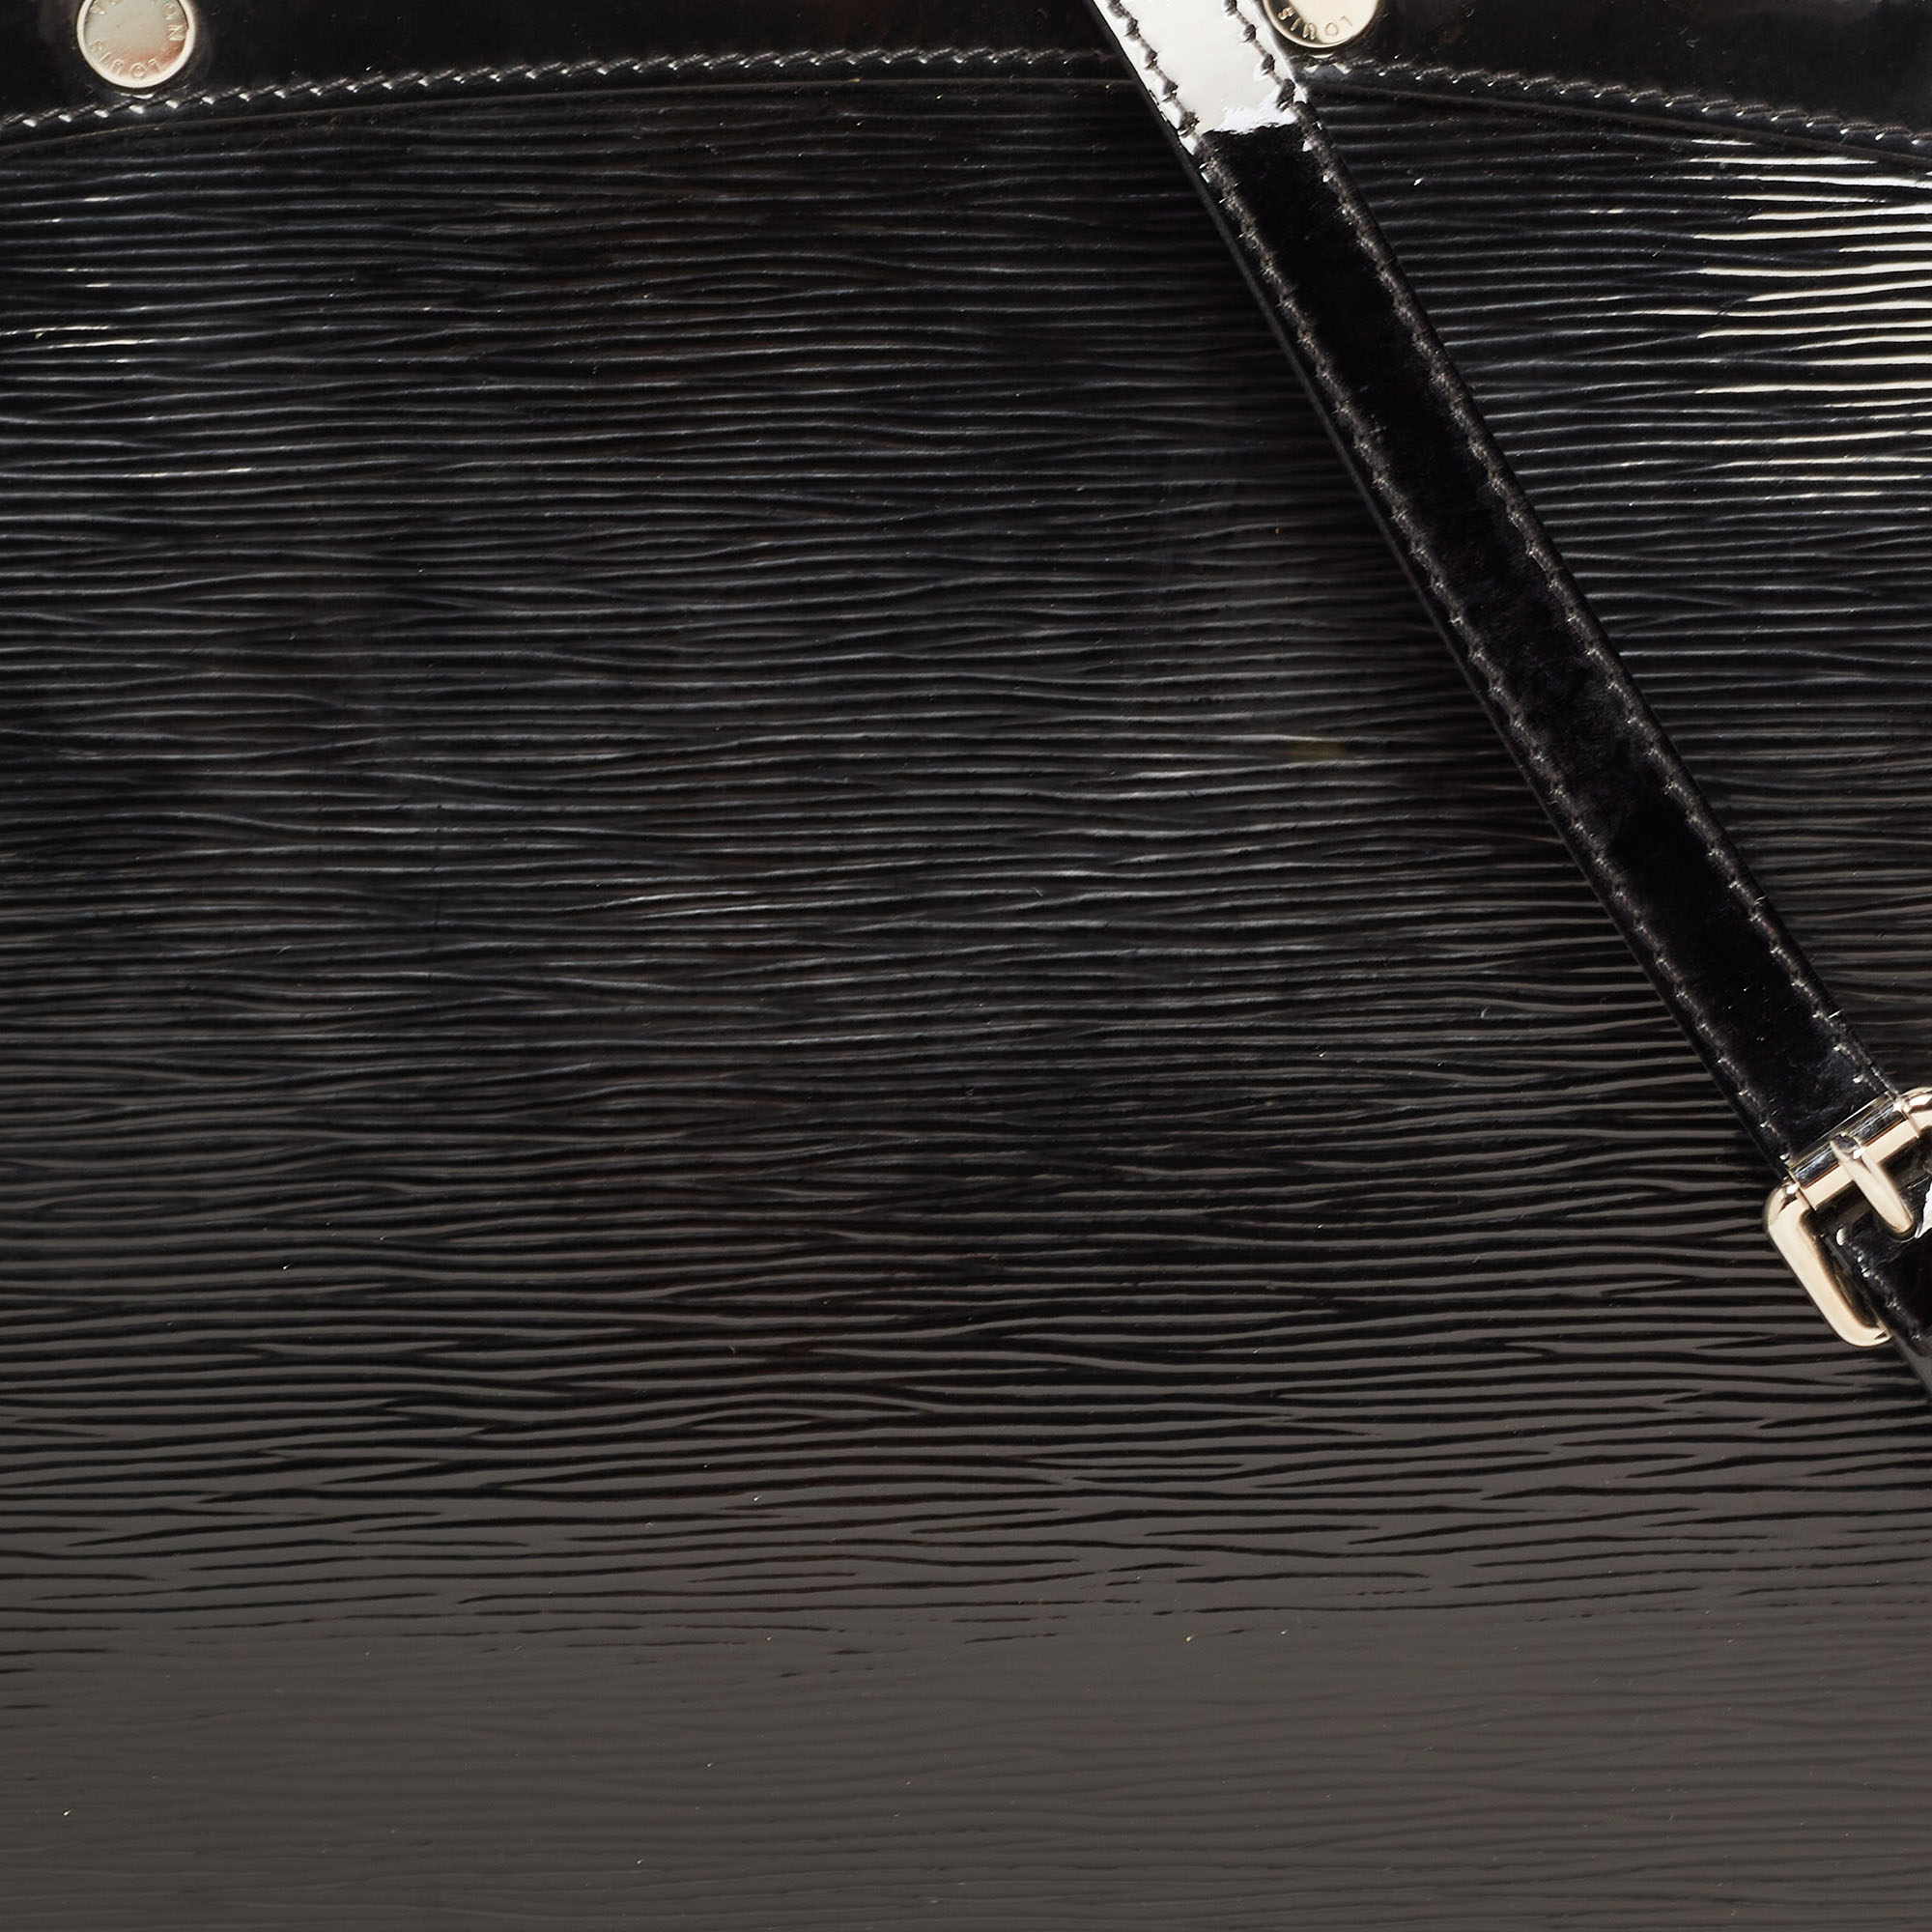 Louis Vuitton Black Electric Epi Leather Brea GM Bag